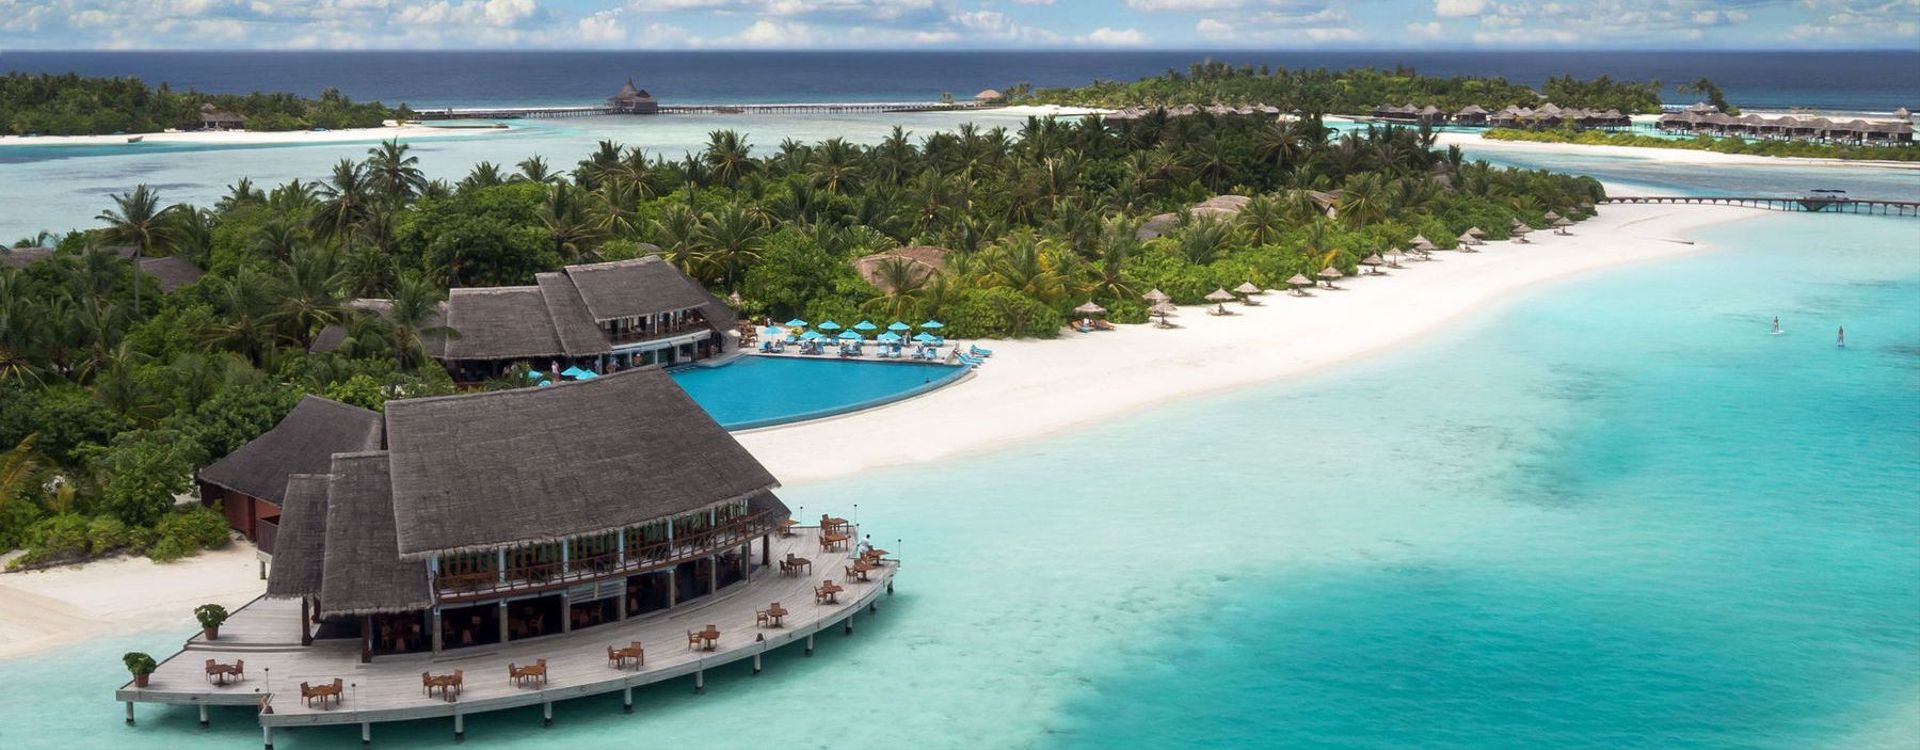 Anantara Dhigu Maldives Resort-Location shots.jpg